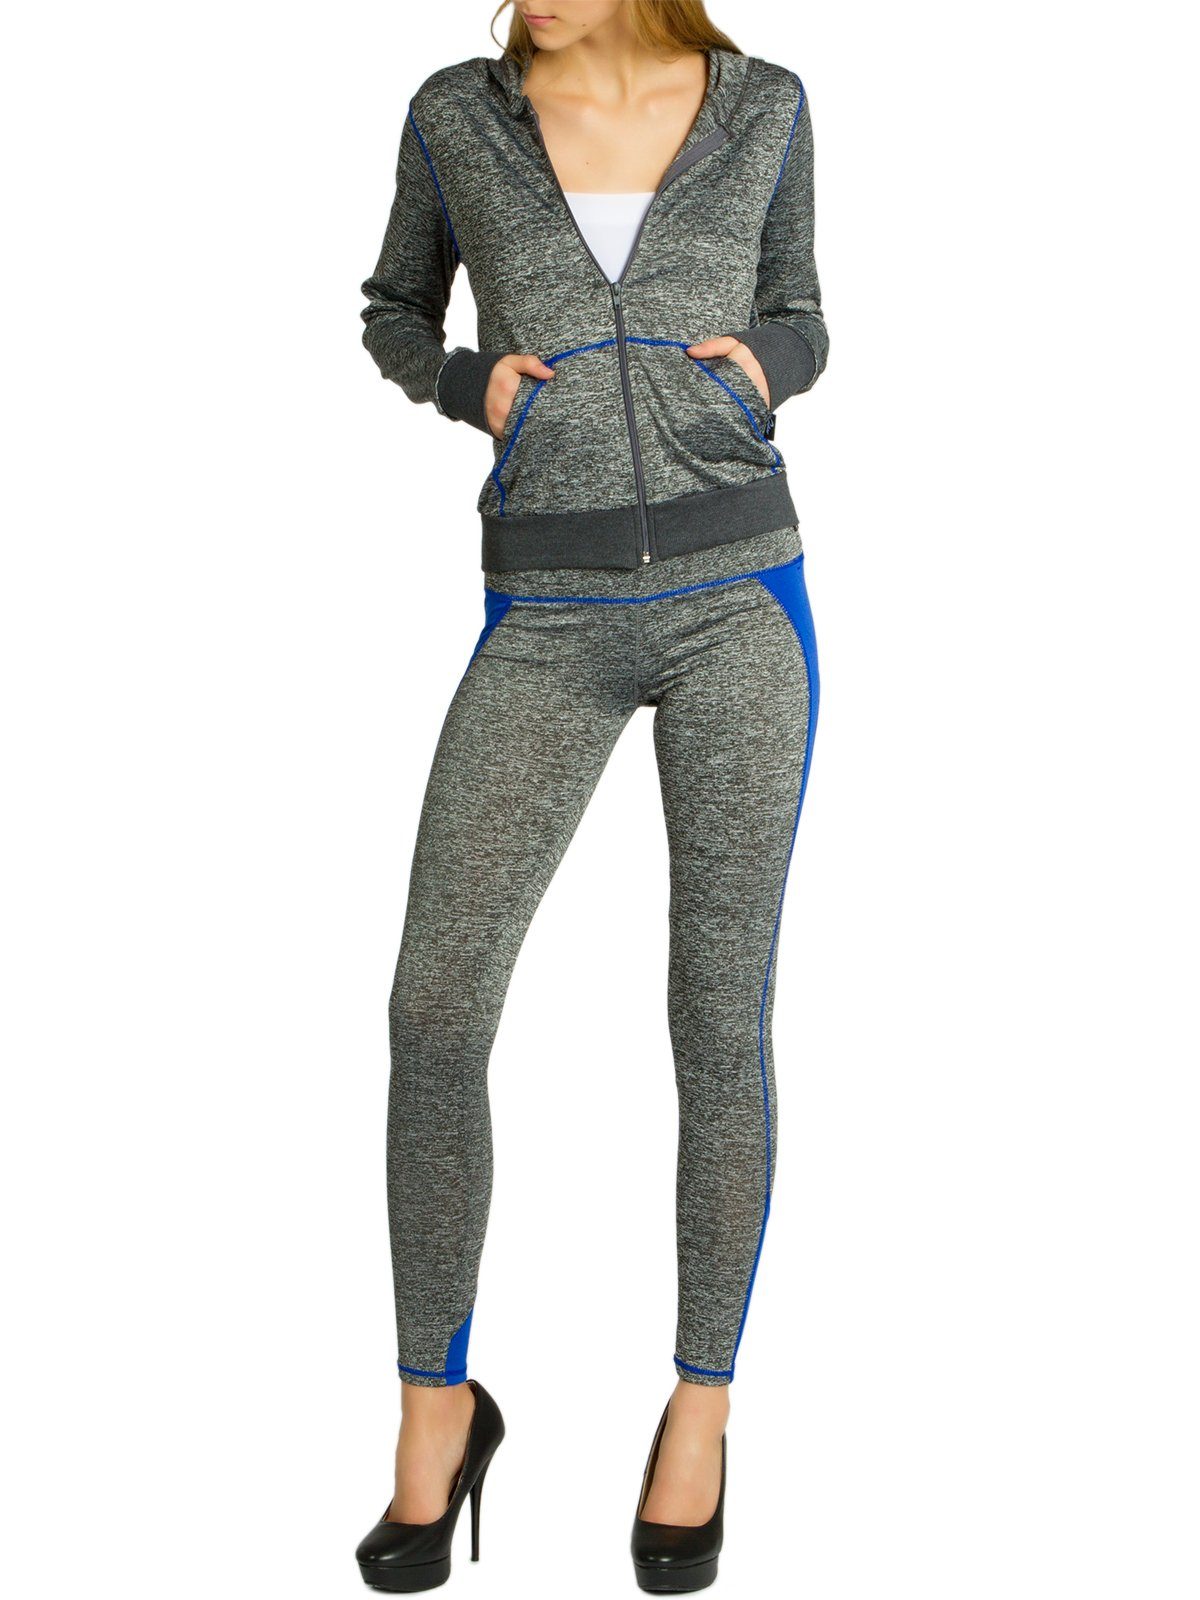 Caspar Trainingsanzug JG001 stylischer Damen Jogginganzug mit Kapuze grau meliert / royal blau